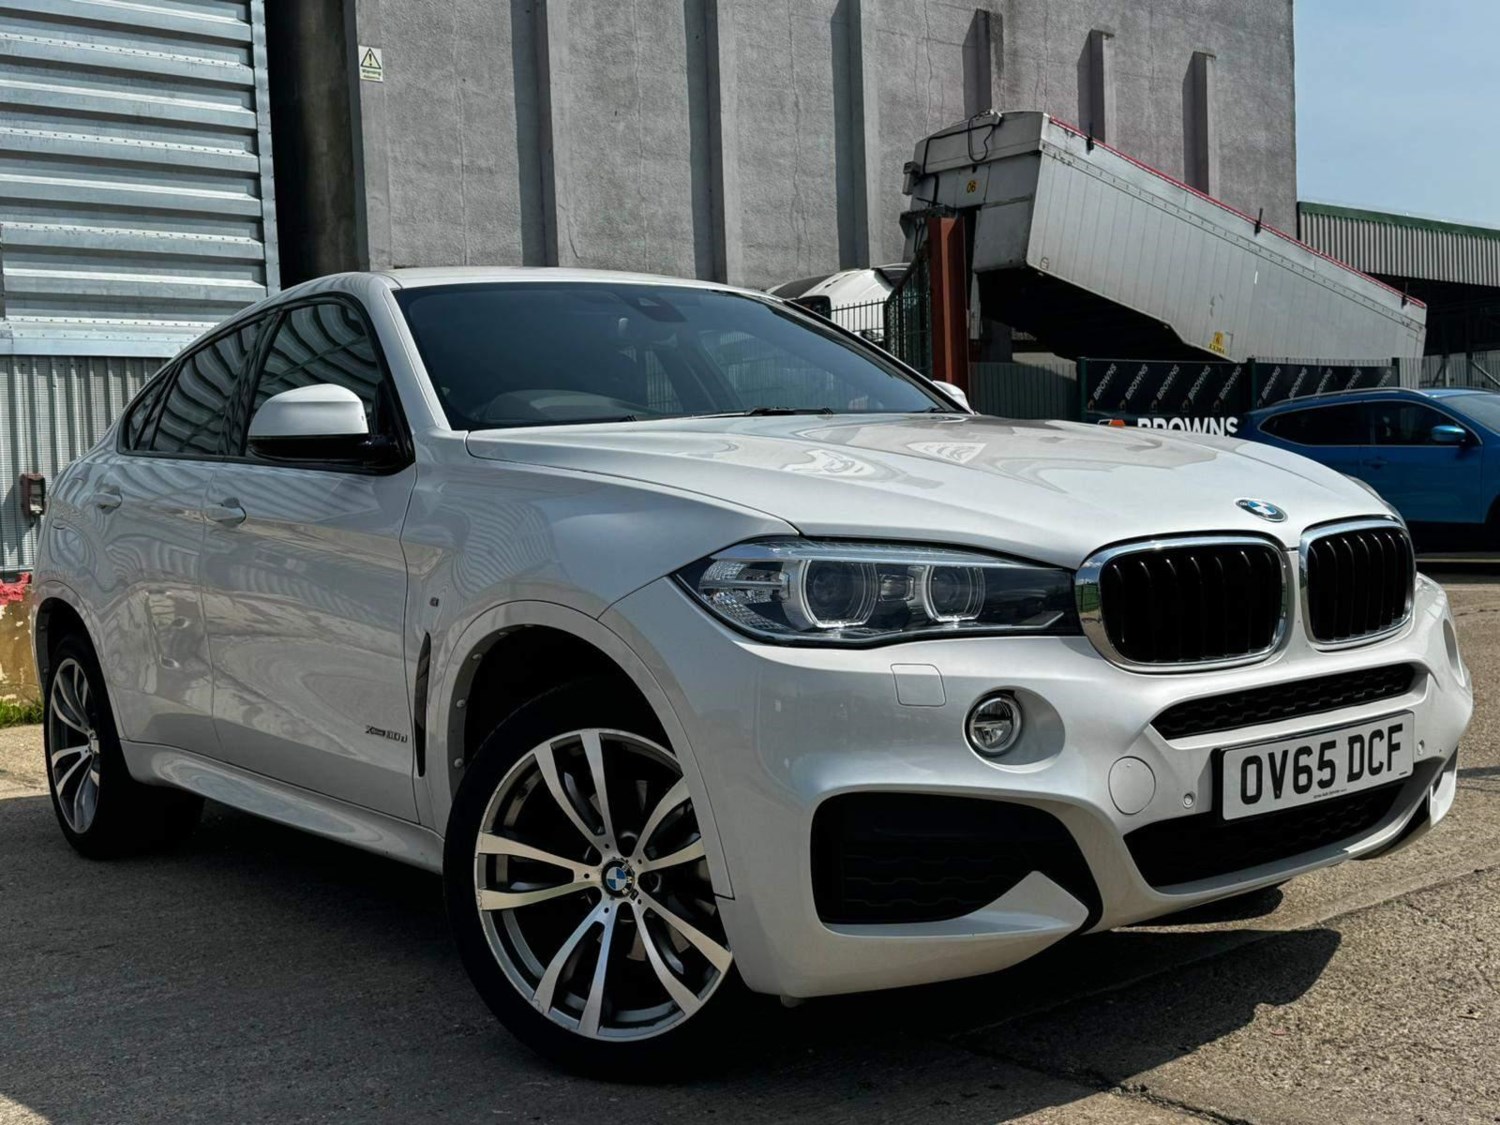 BMW X6 Listing Image